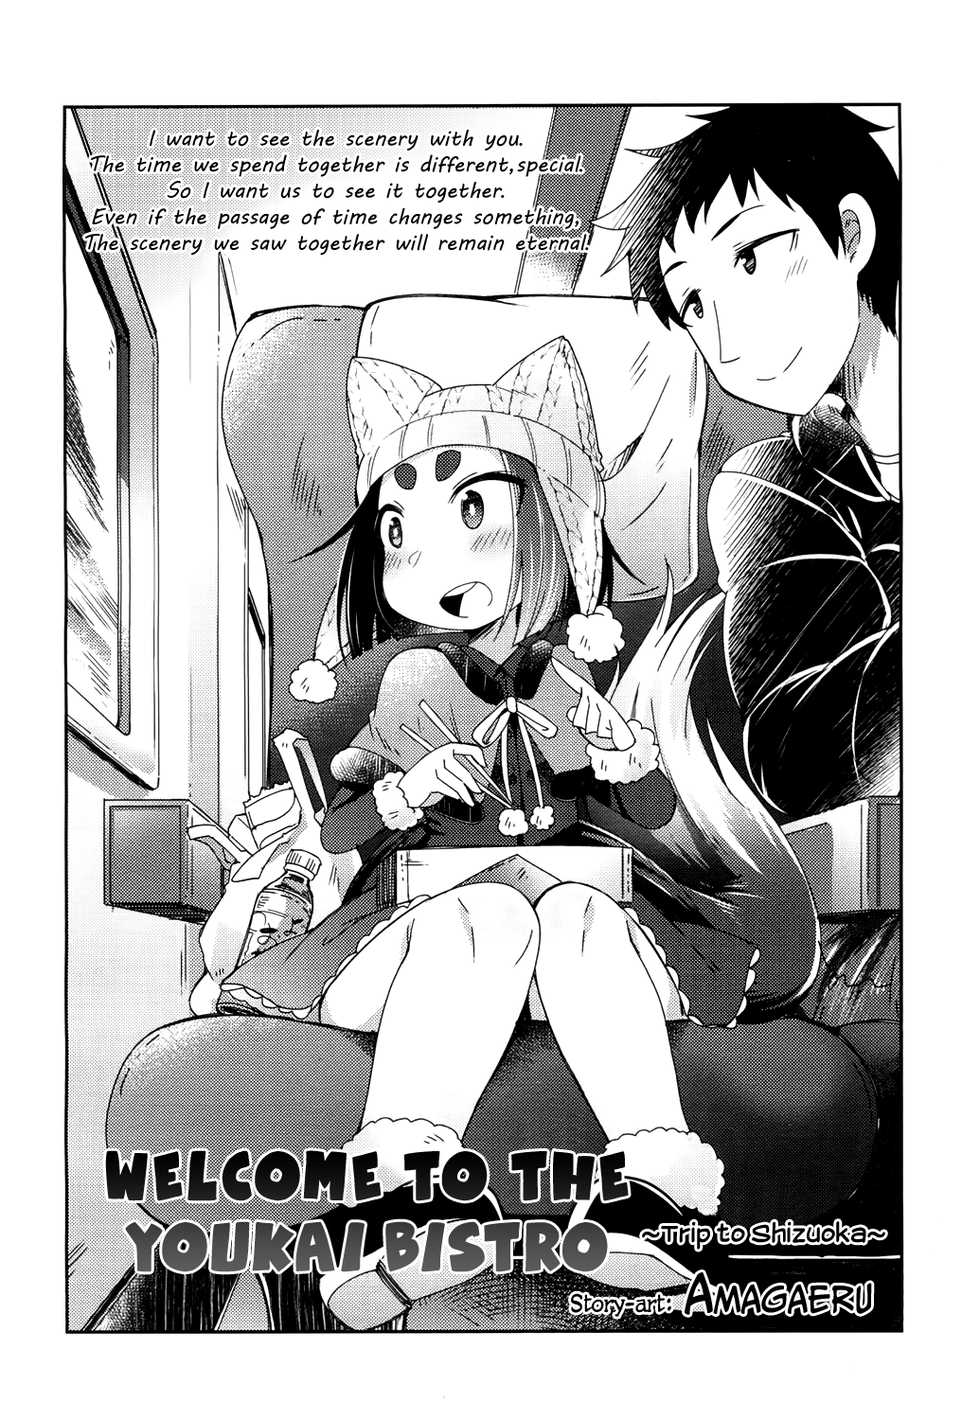 [Amagaeru] Youkai Koryouriya ni Youkoso - Welcome to apparition small restaurant [English] {CapableScoutMan & bigk40k & mysterymeat3} - Page 38